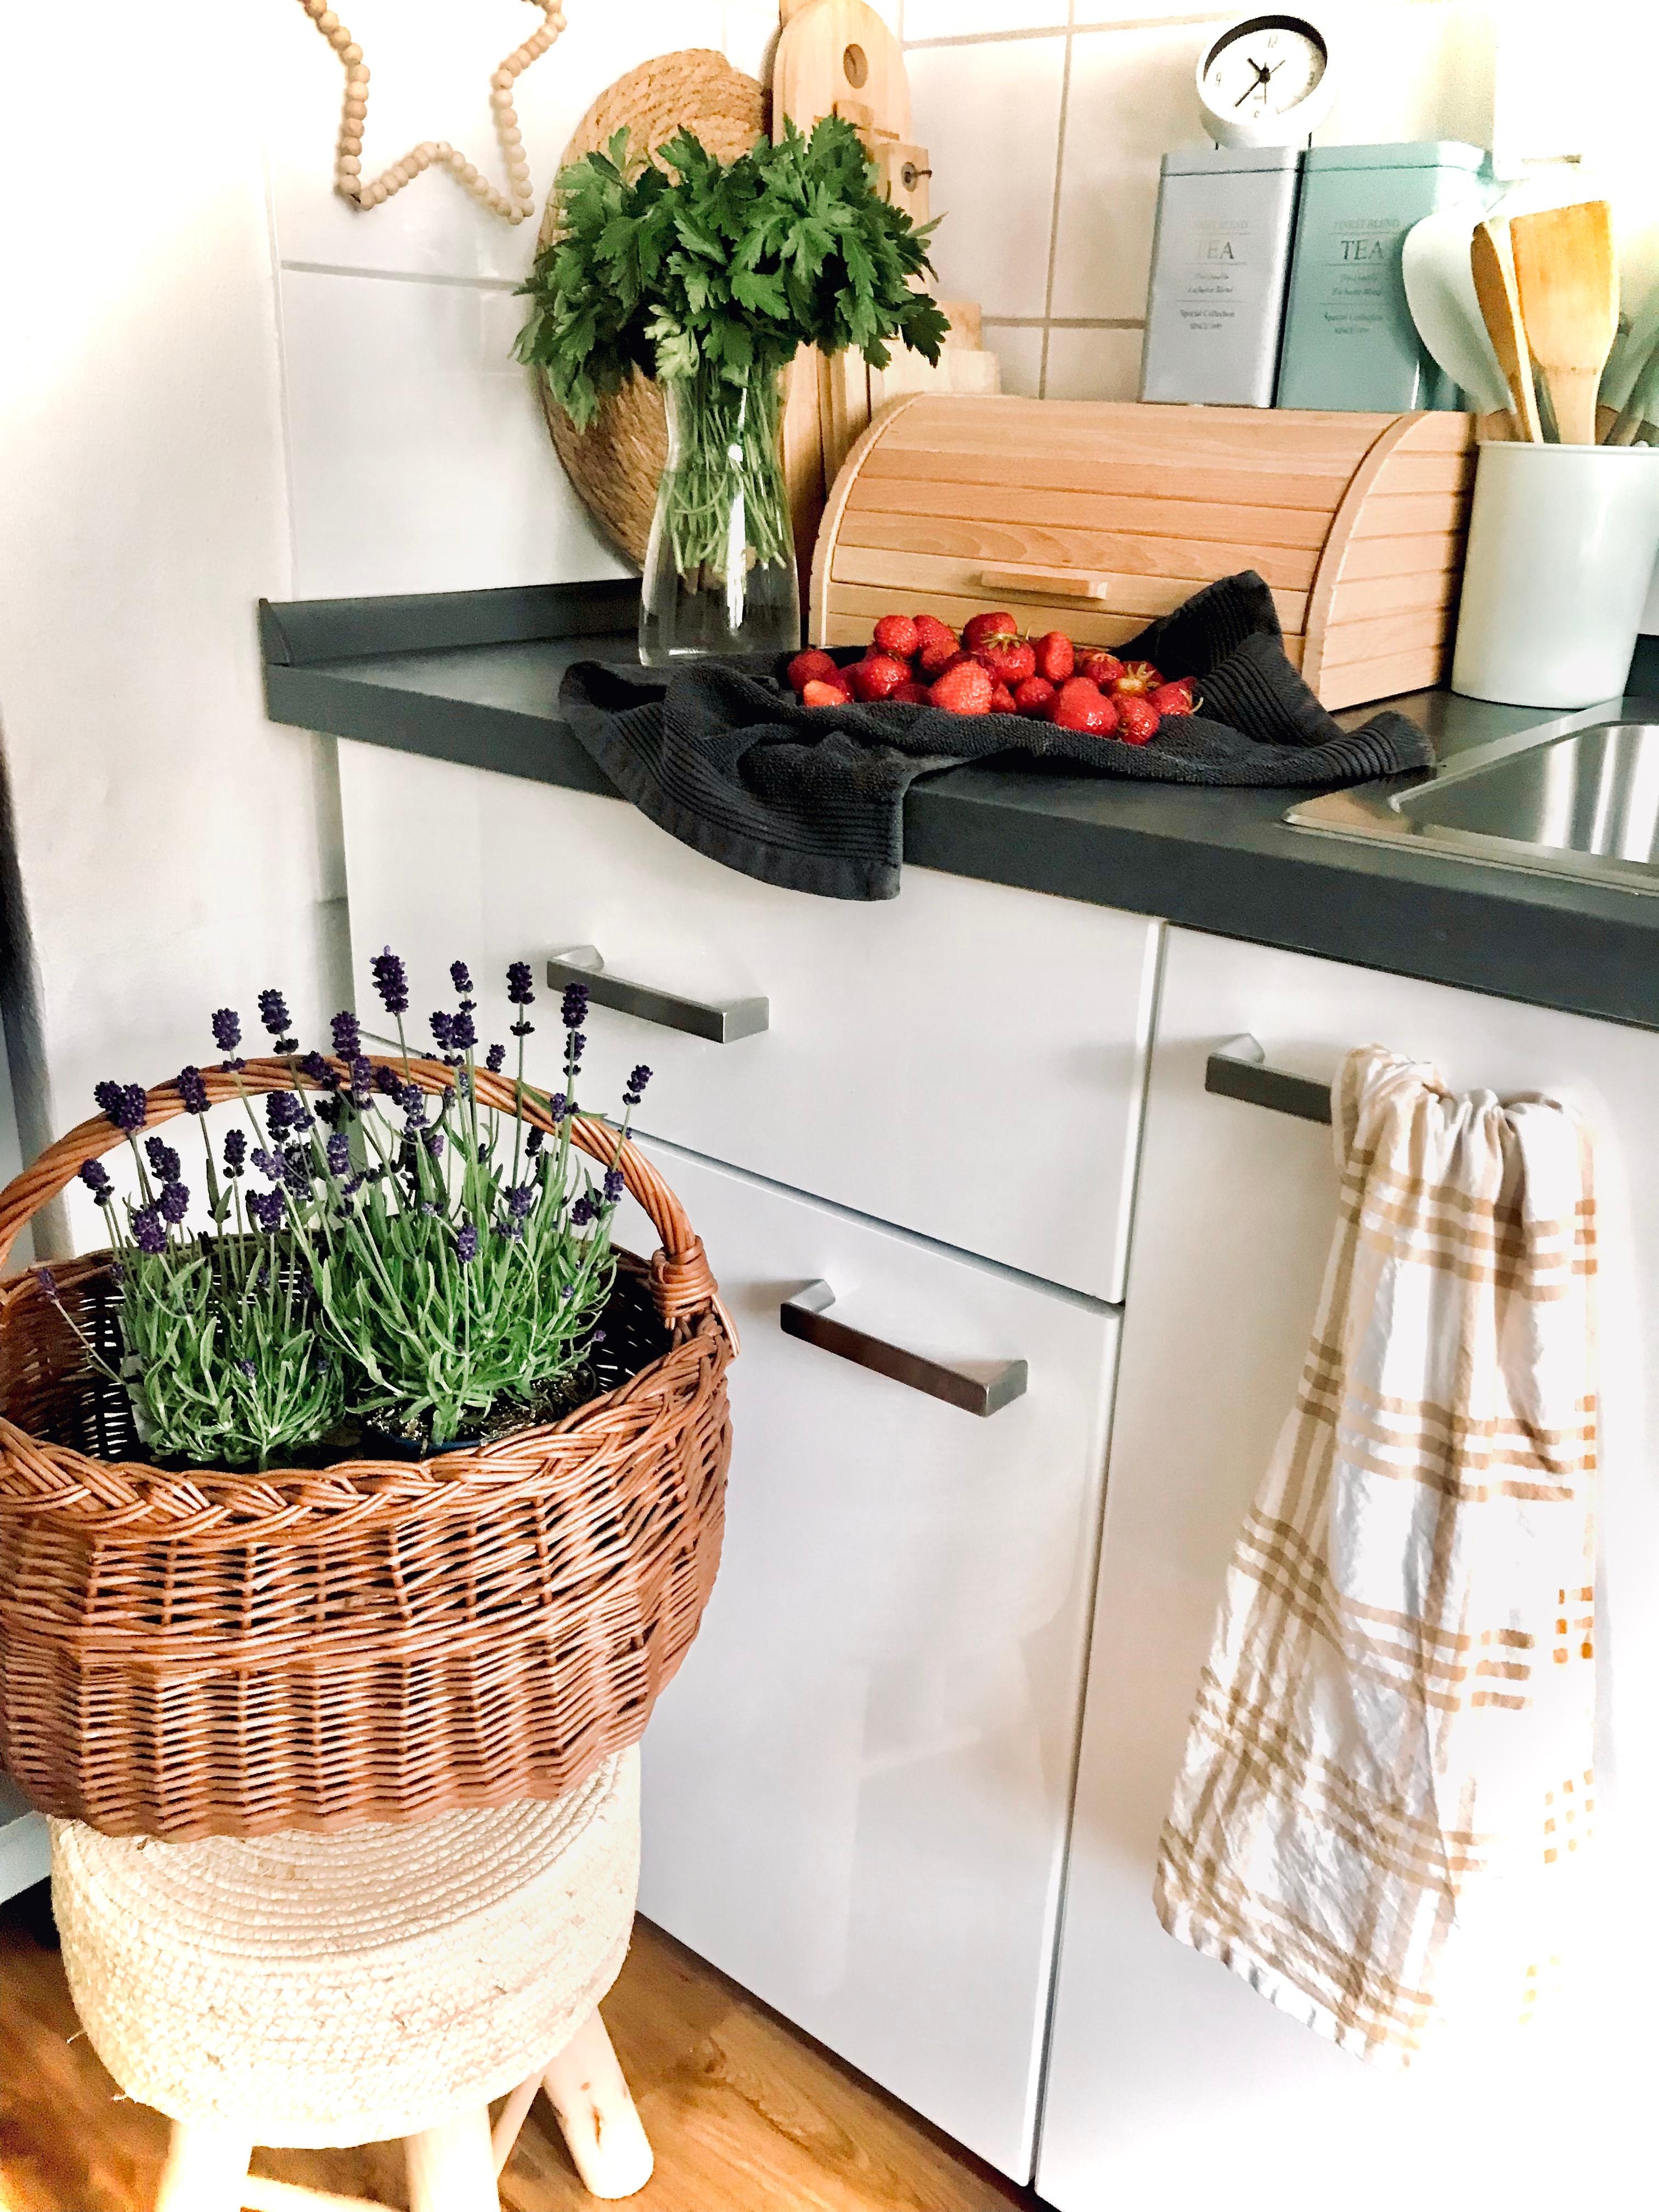 Sommeküche 🍓
#fresh #food #erdbeeren #lavendel #küche #hocker #korb #küchendetail #home 